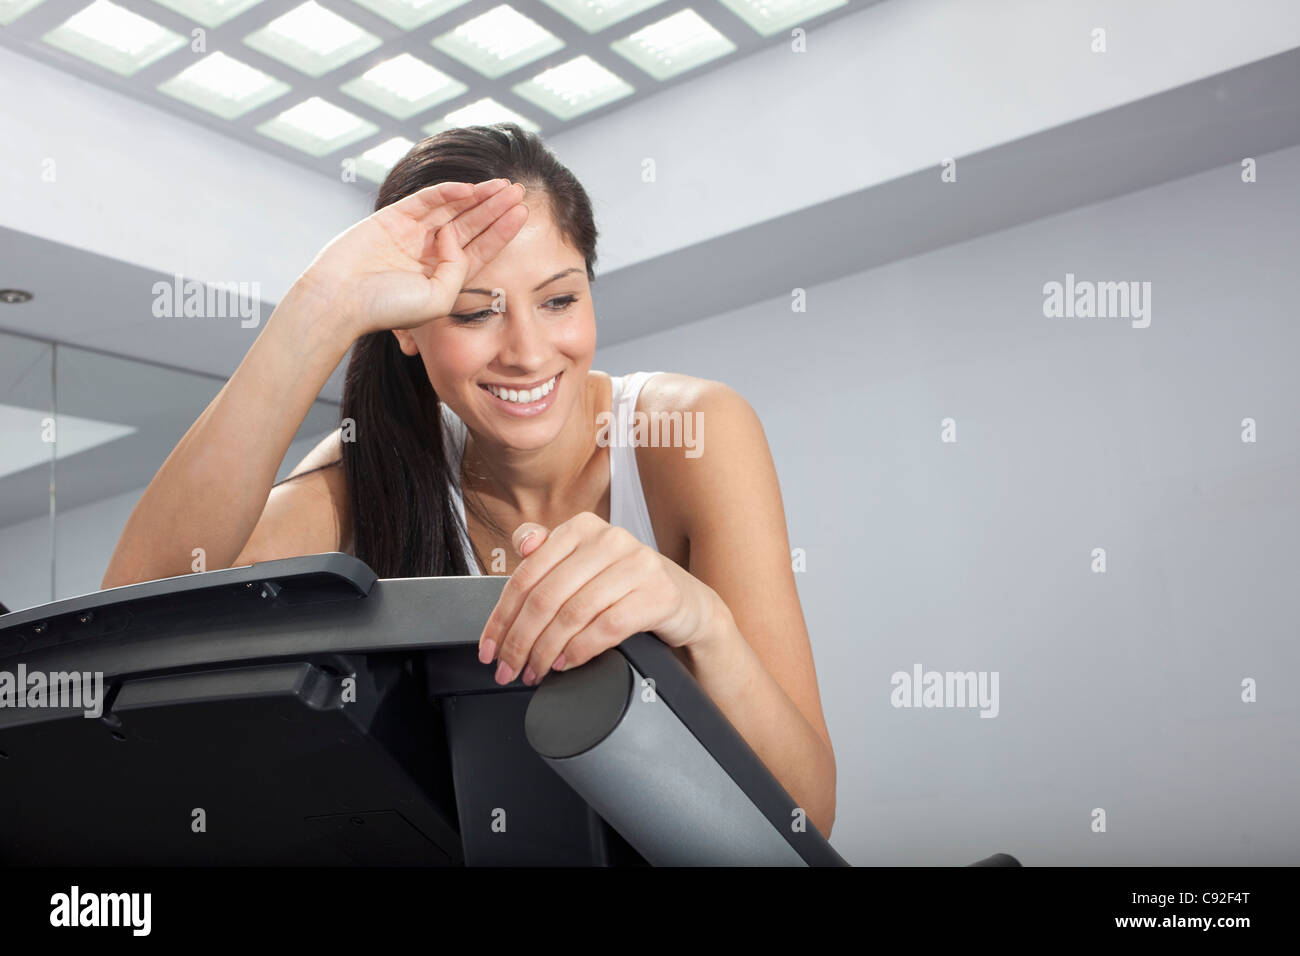 Smiling woman resting on treadmill Stock Photo - Alamy